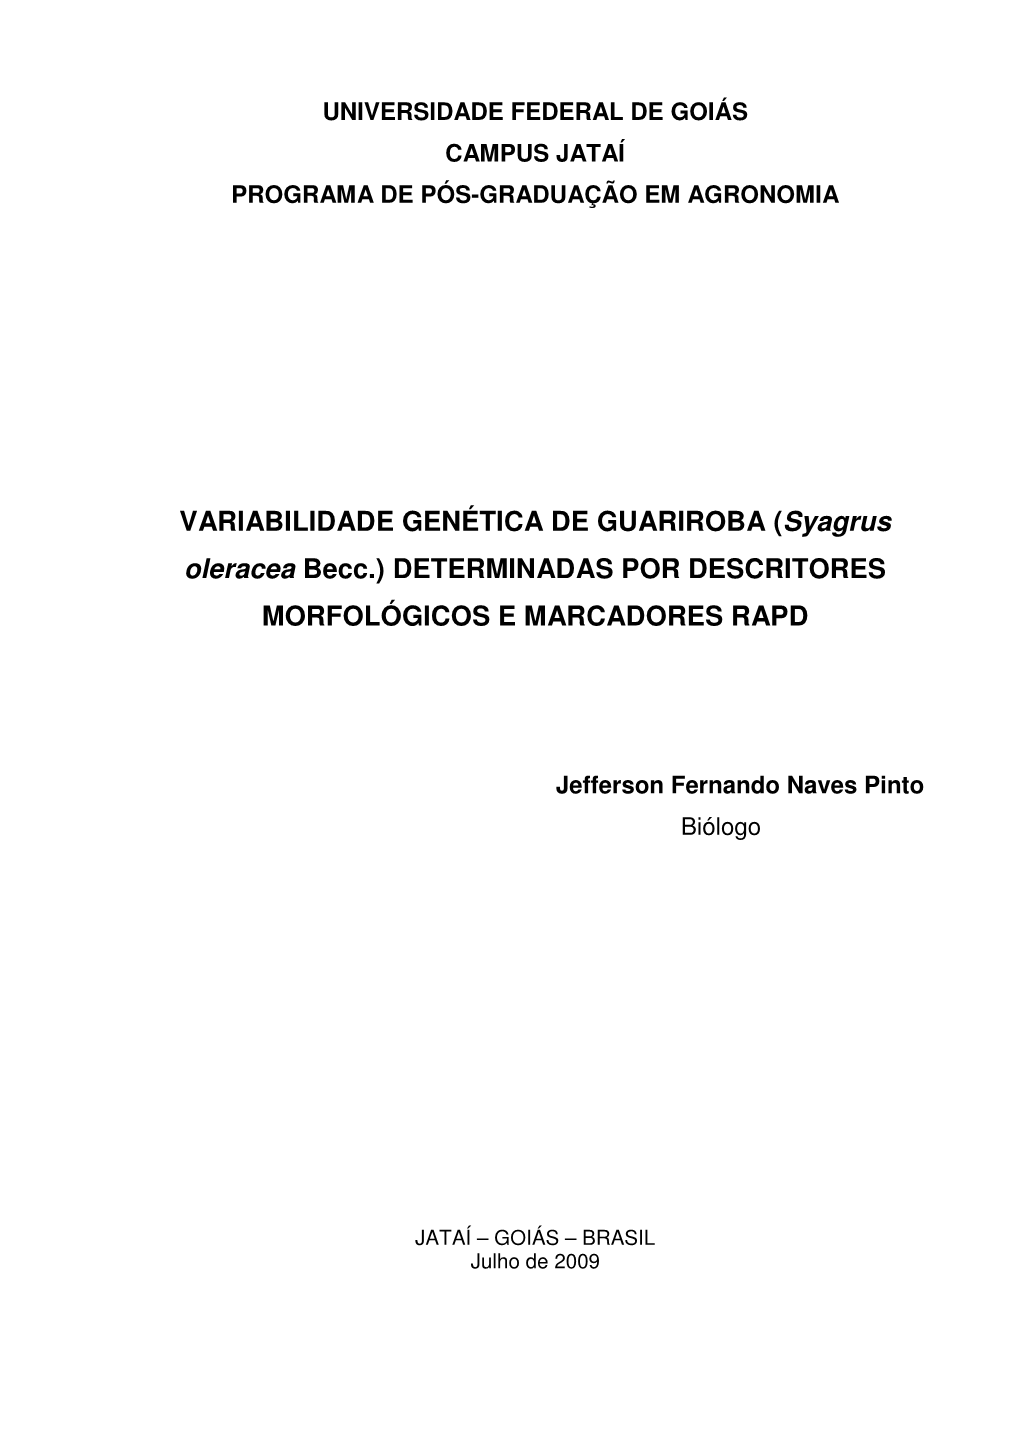 VARIABILIDADE GENÉTICA DE GUARIROBA (Syagrus Oleracea